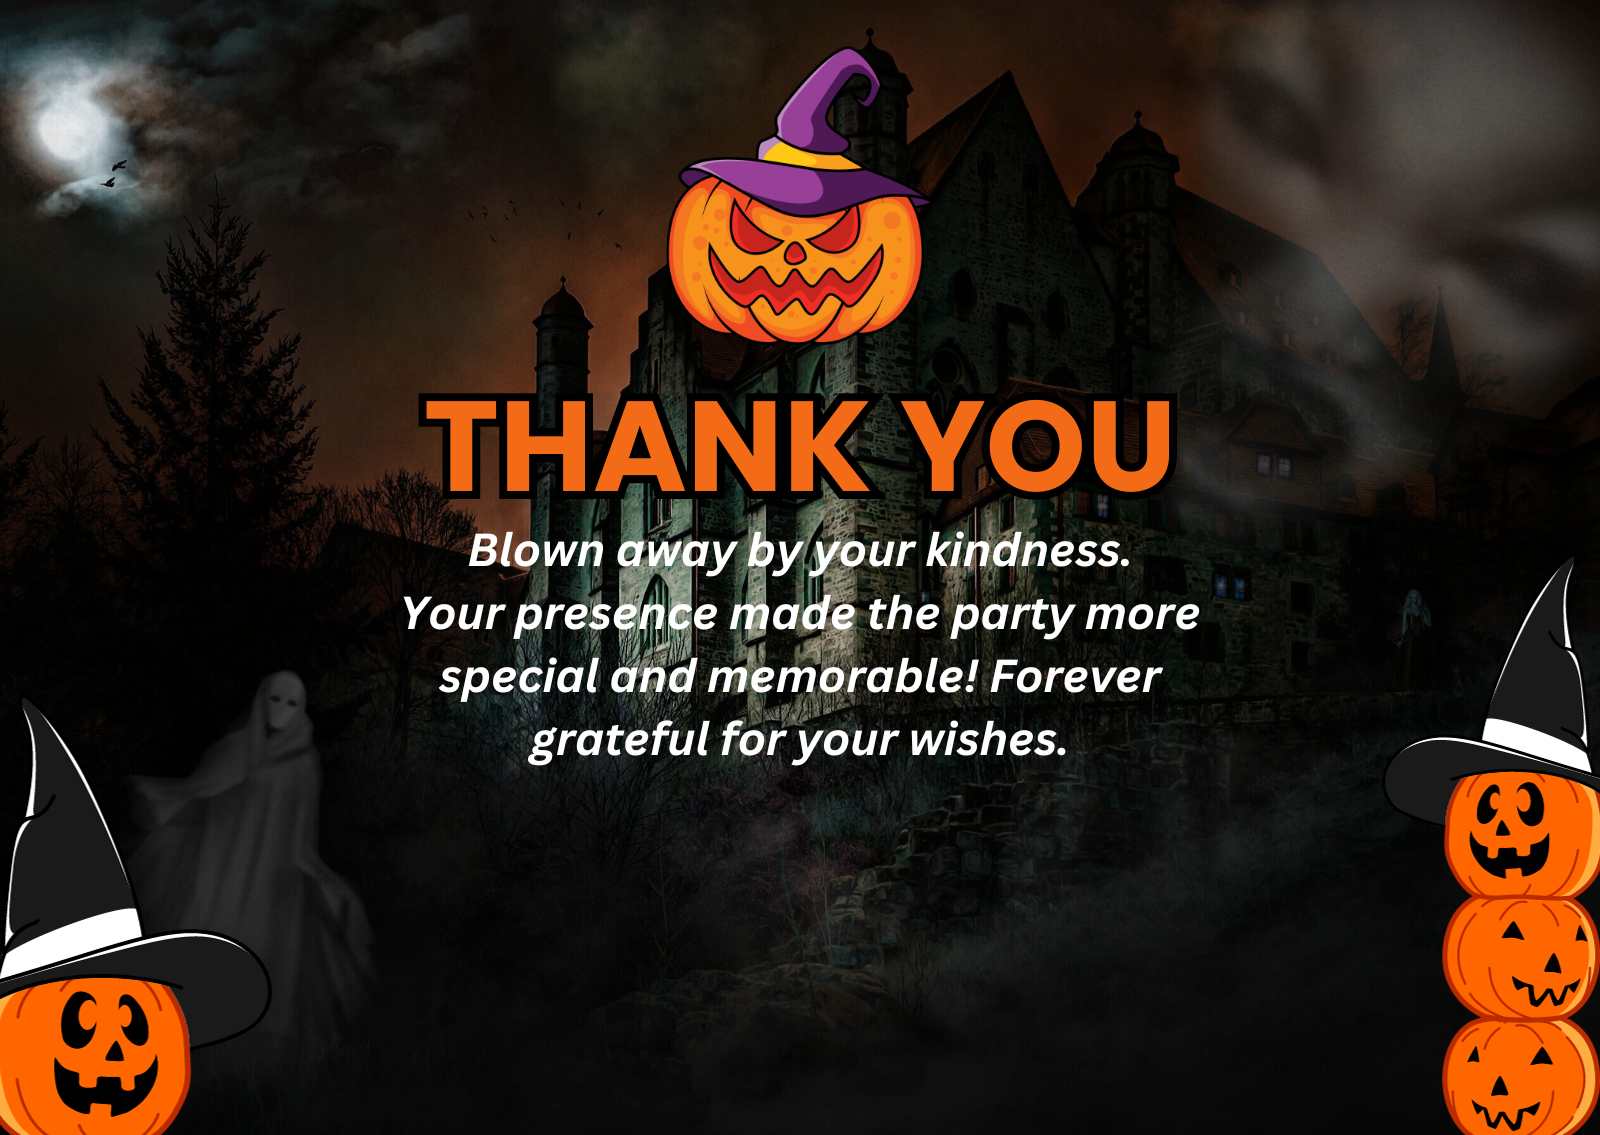 Spooky & Fun Halloween Theme Birthday Thank You Card